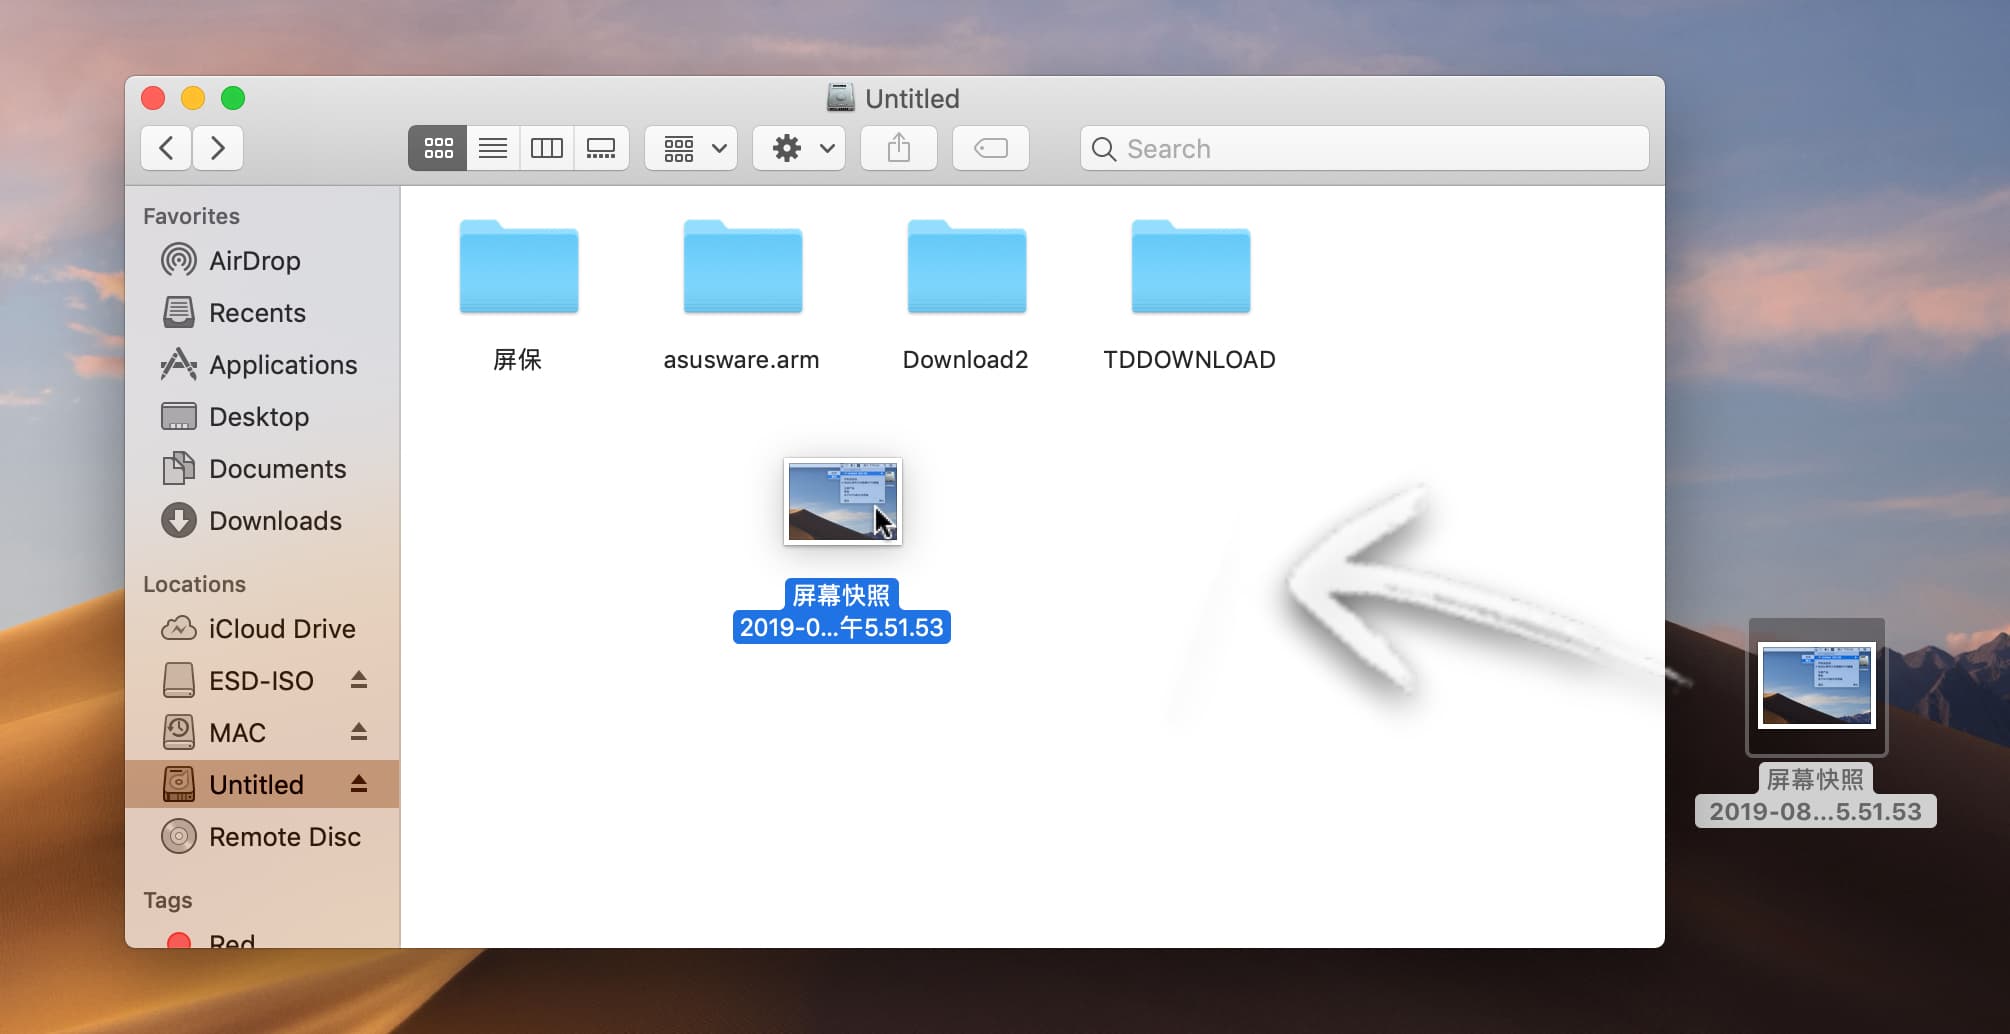 NTFS for Mac 助手 - 让 Mac 读写 Windows 磁盘文件[特惠] 6